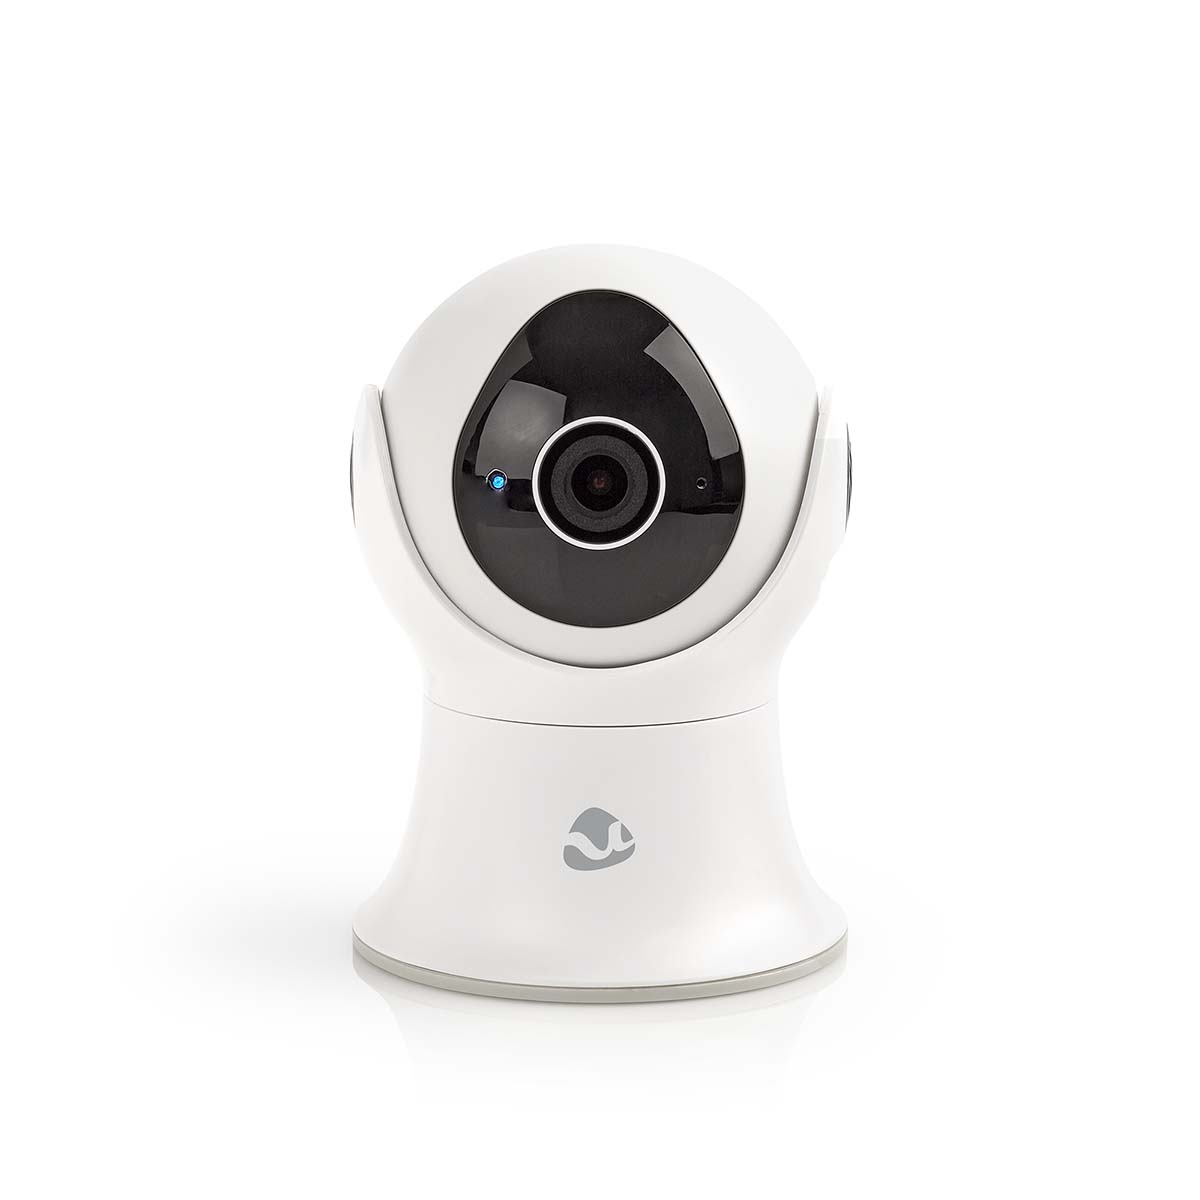 Cloud storage 720-1080P wifi ip camera smart home security night vision  X 